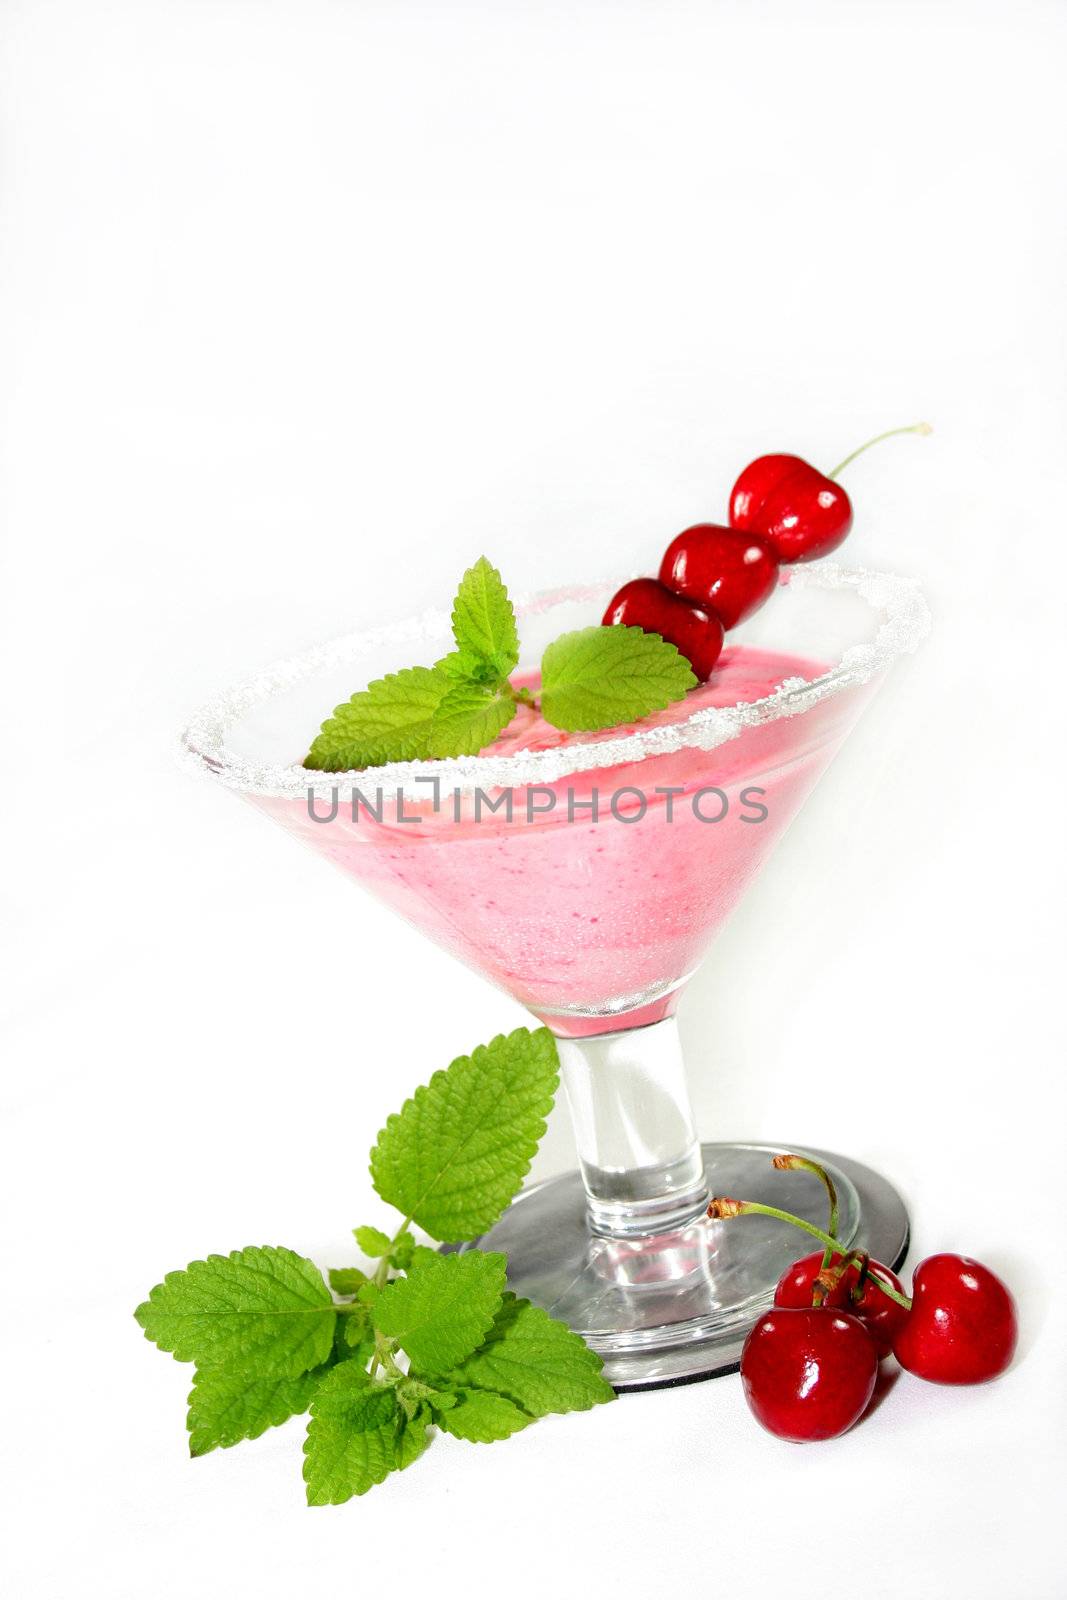 Cherry dessert by silencefoto